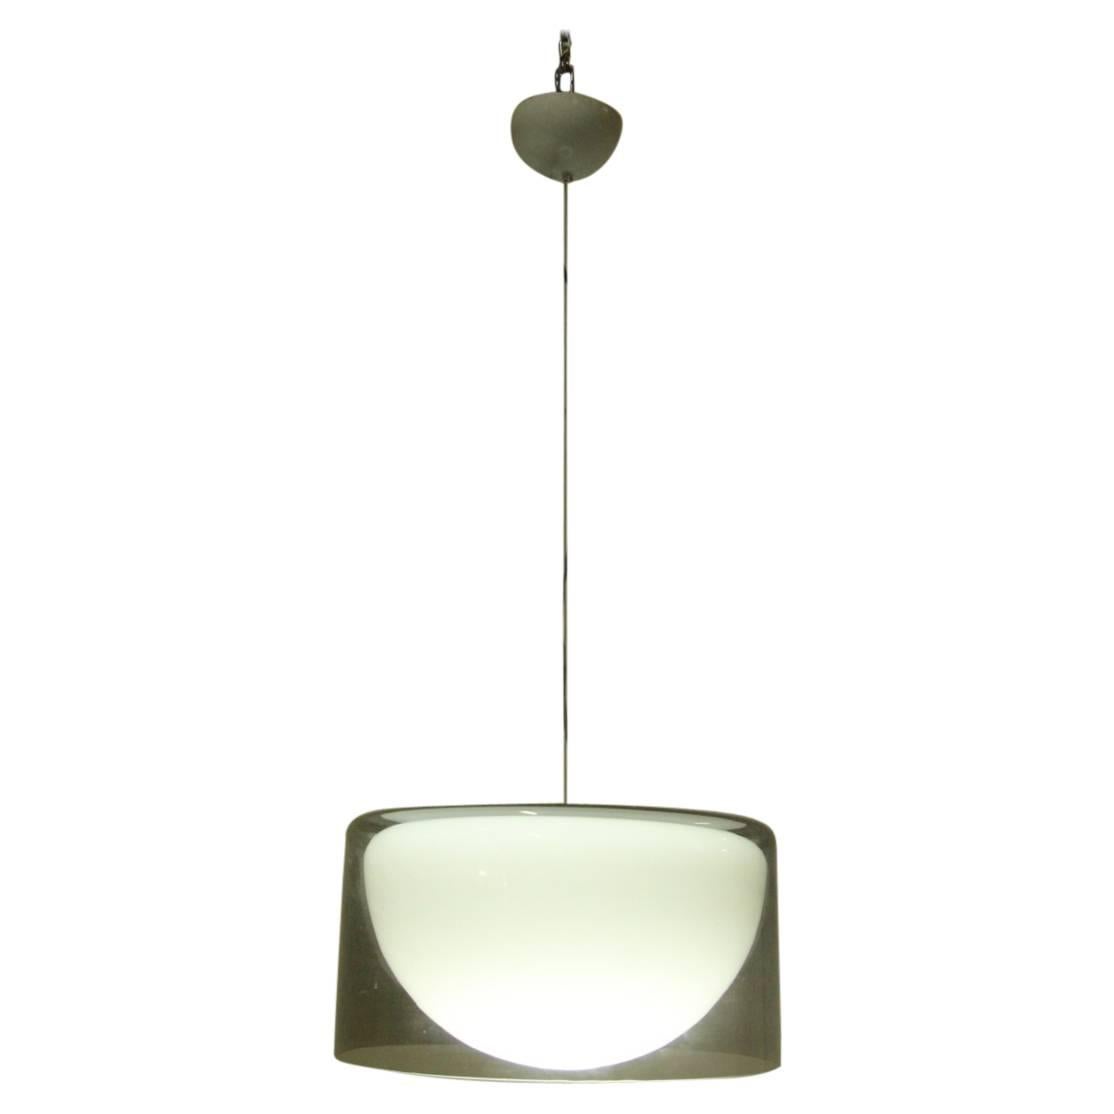 Ceiling Lamp Lumenform Toso Design 1960 Murano Art Glass Chandeliers Pendant For Sale